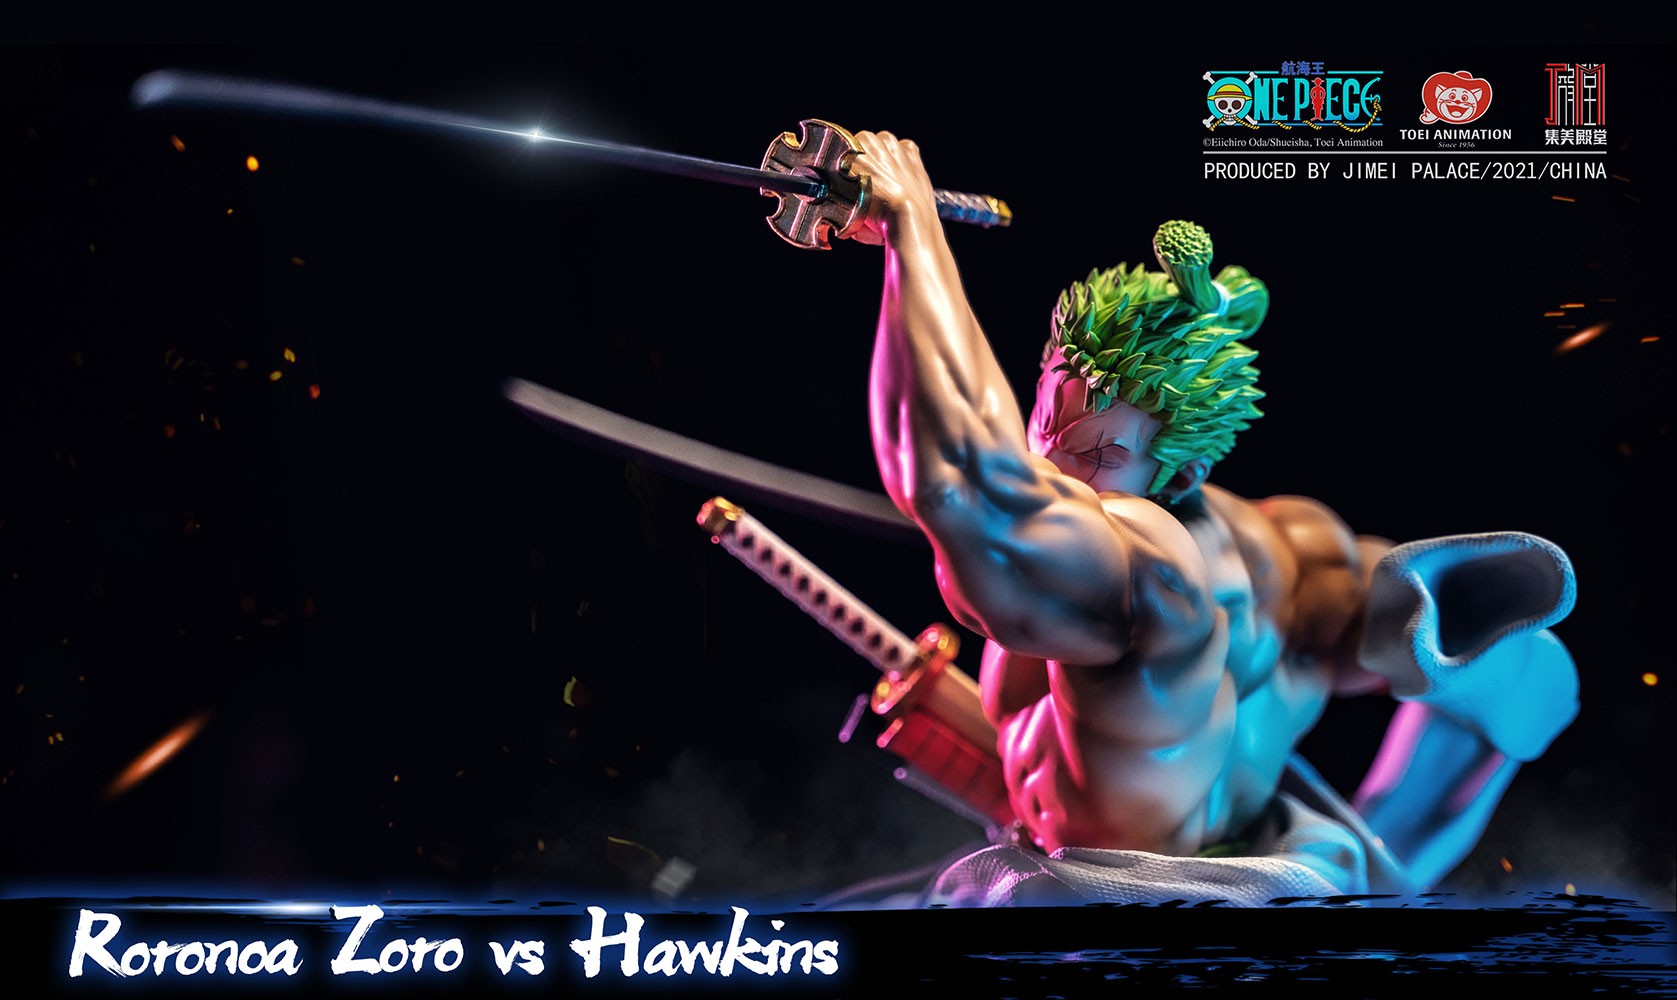 Roronoa Zoro VS Hawkins (Prototype Shown) View 2